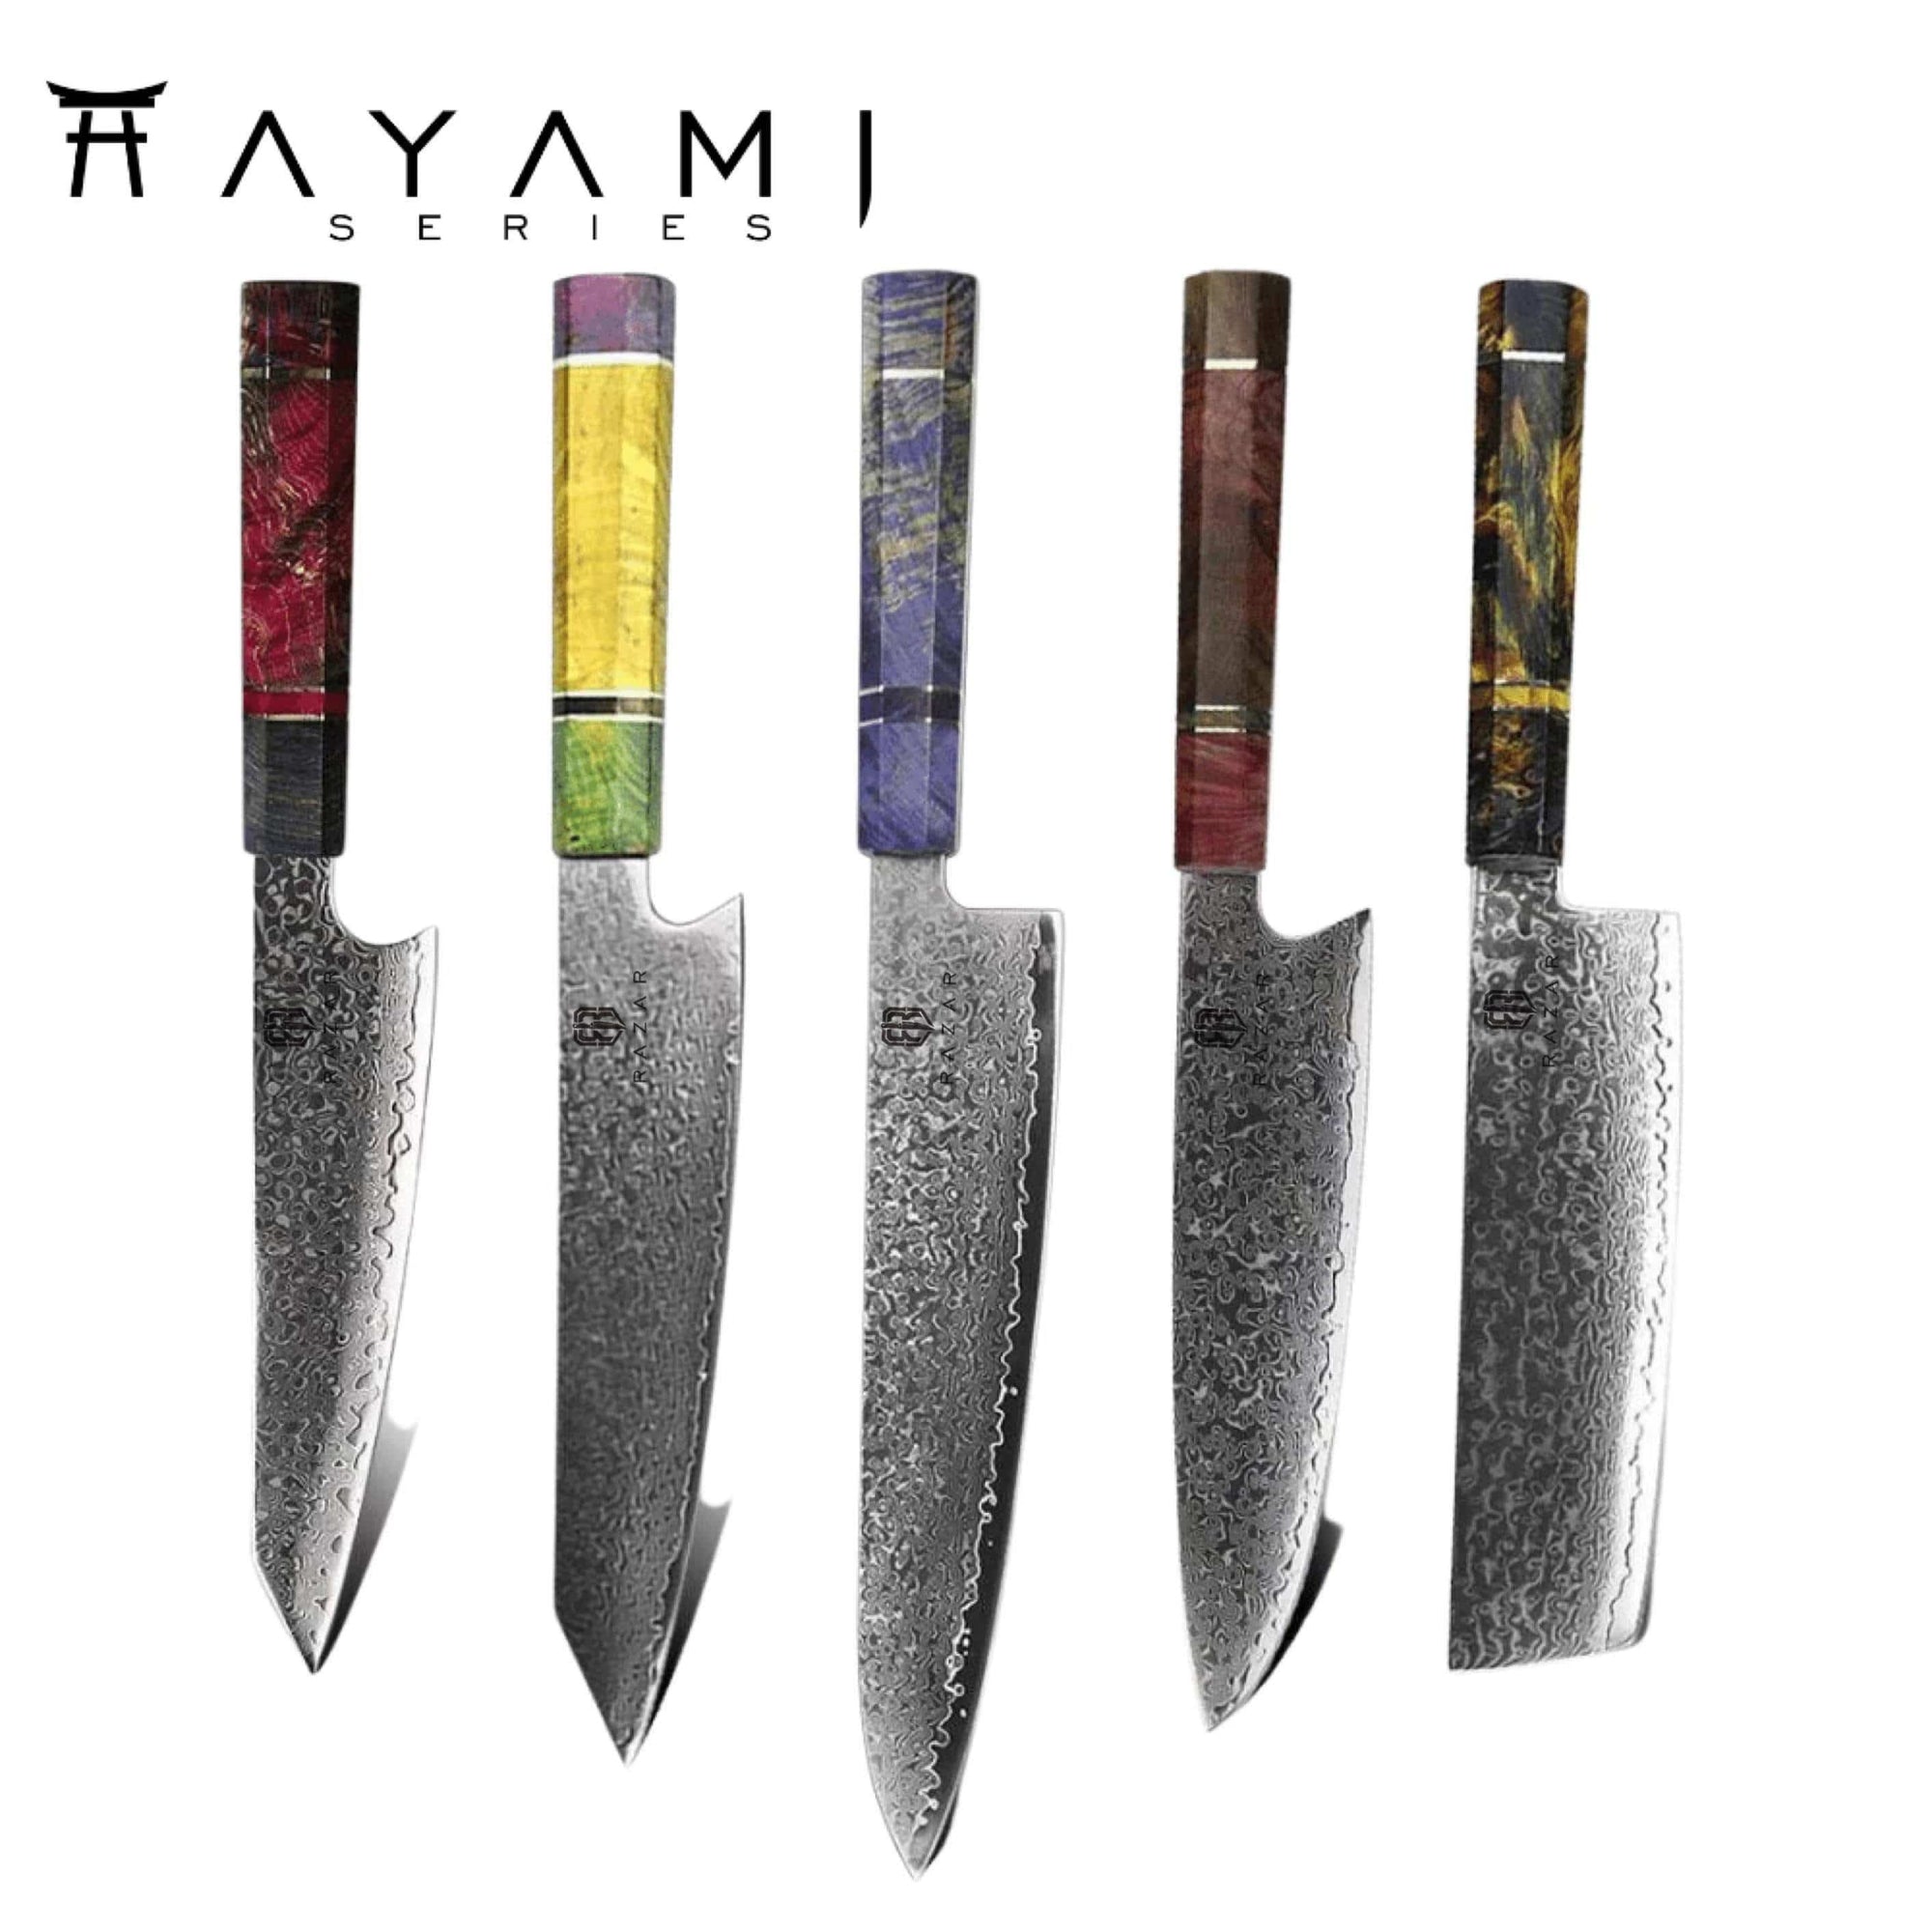 Hayami series